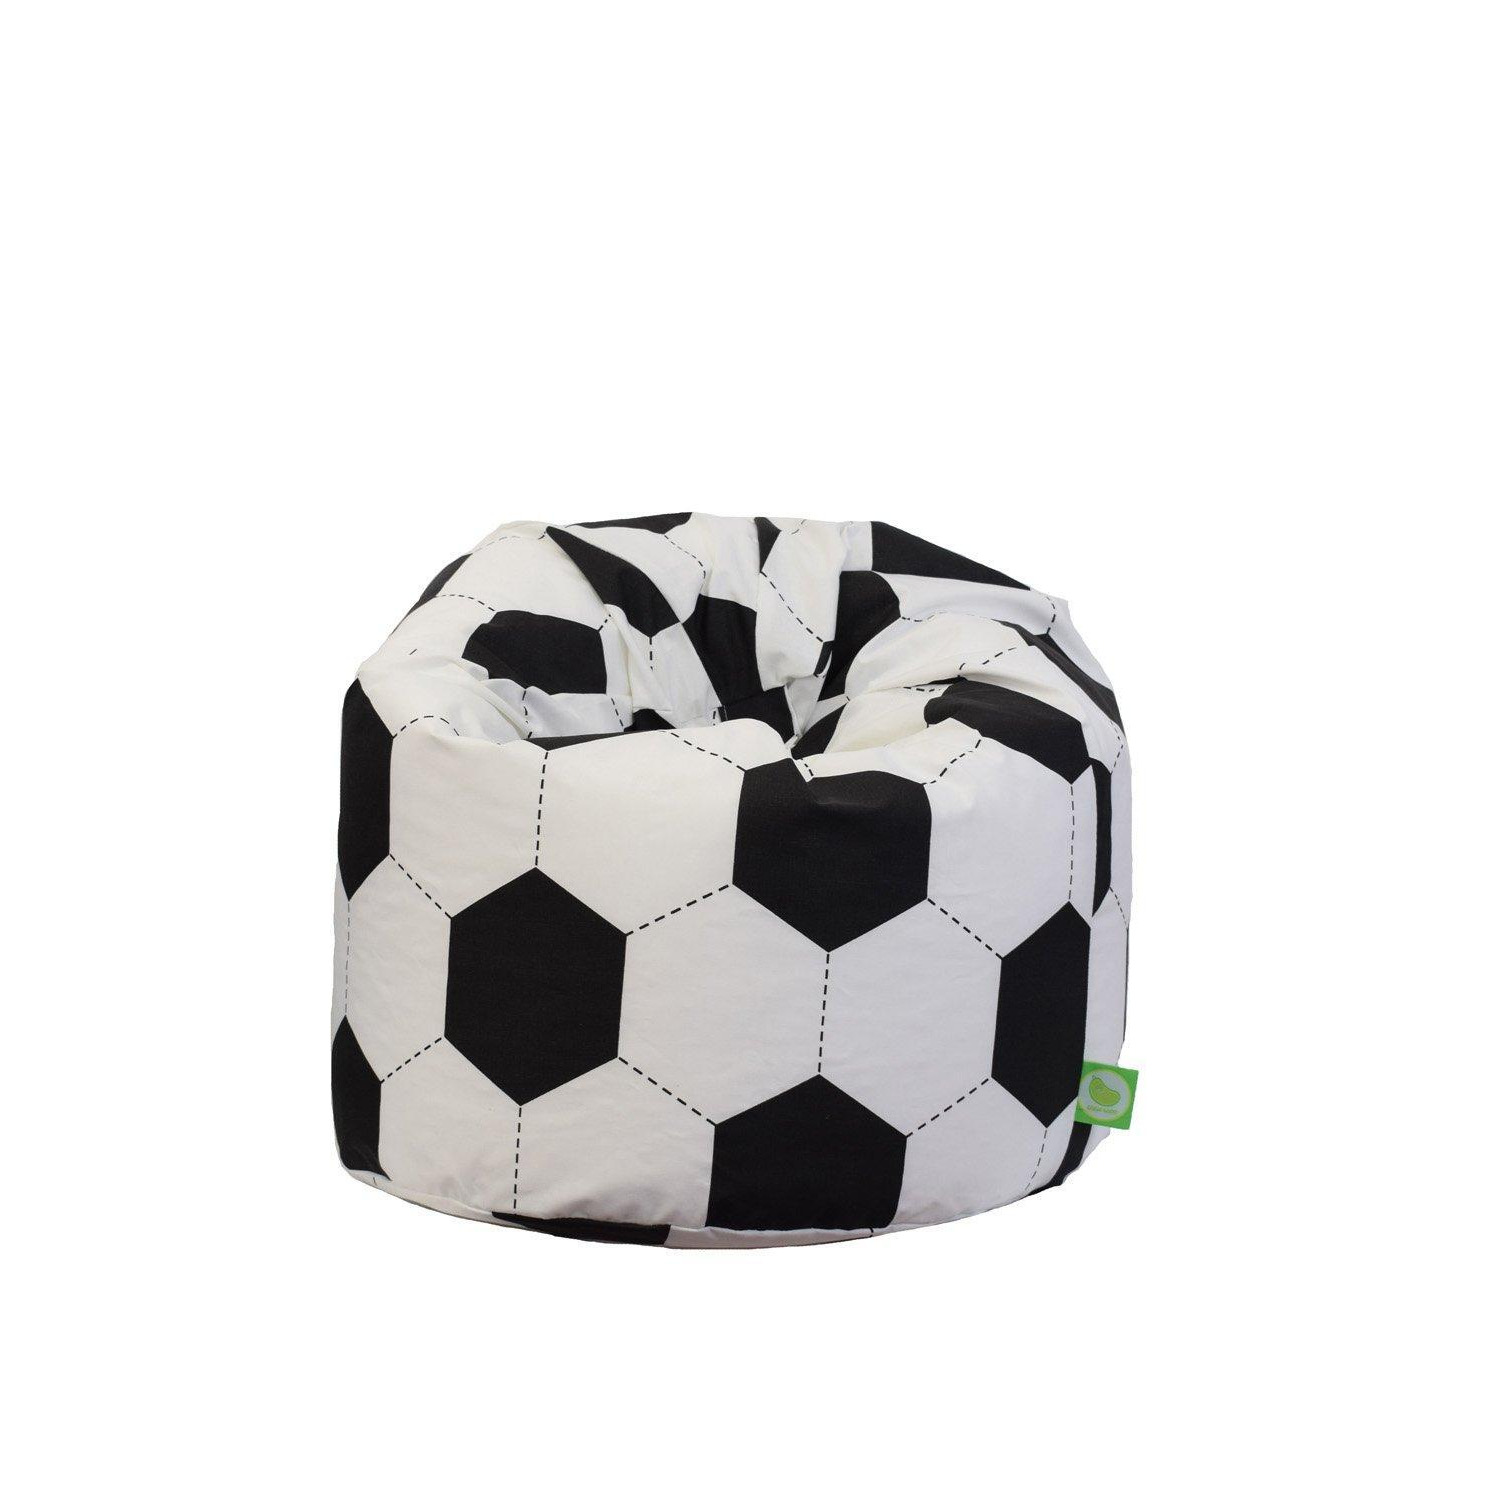 Cotton Football Bean Bag Large Size - image 1